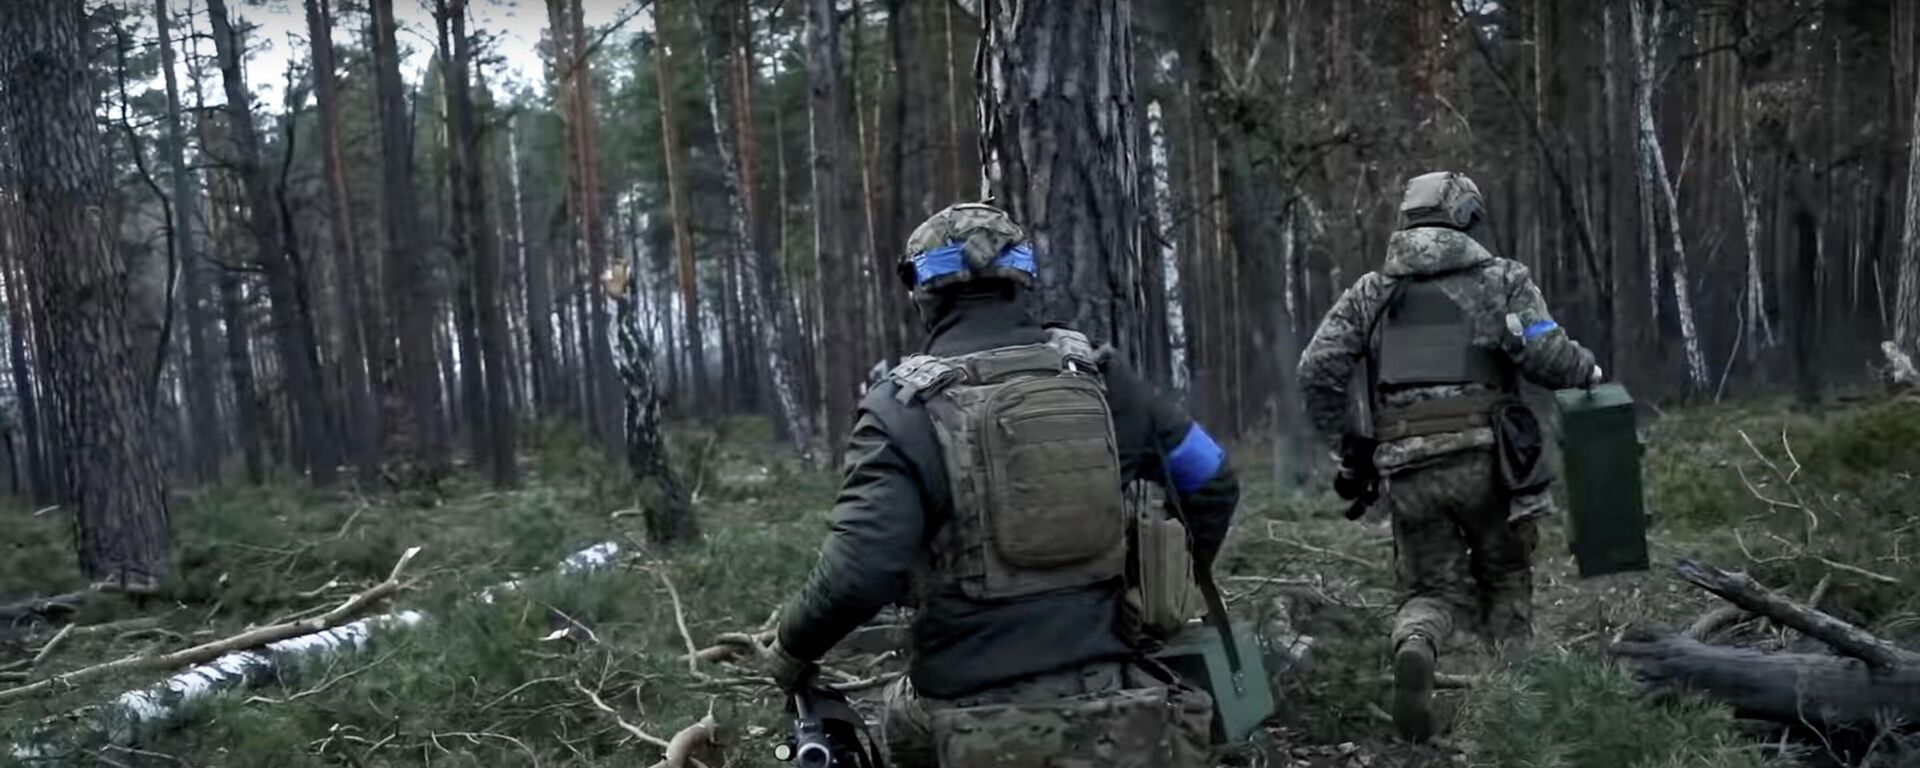 Militares ucranianos cruzan un bosque - Sputnik Mundo, 1920, 17.03.2022